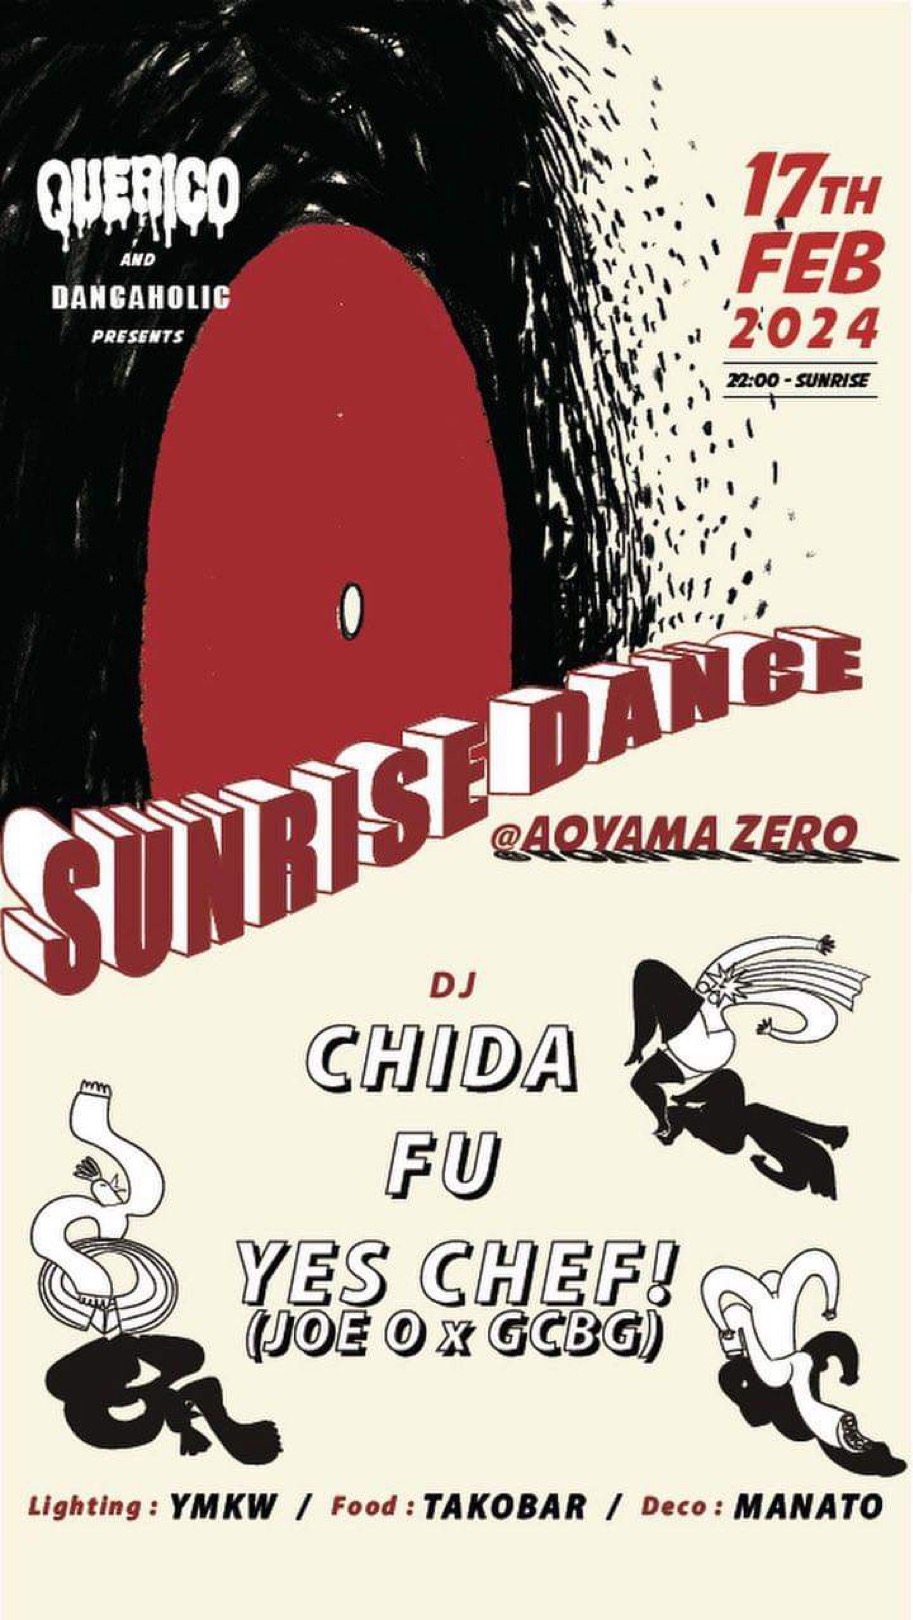 QUERICO x DANCAHOLIC presents “Sunrise Dance”